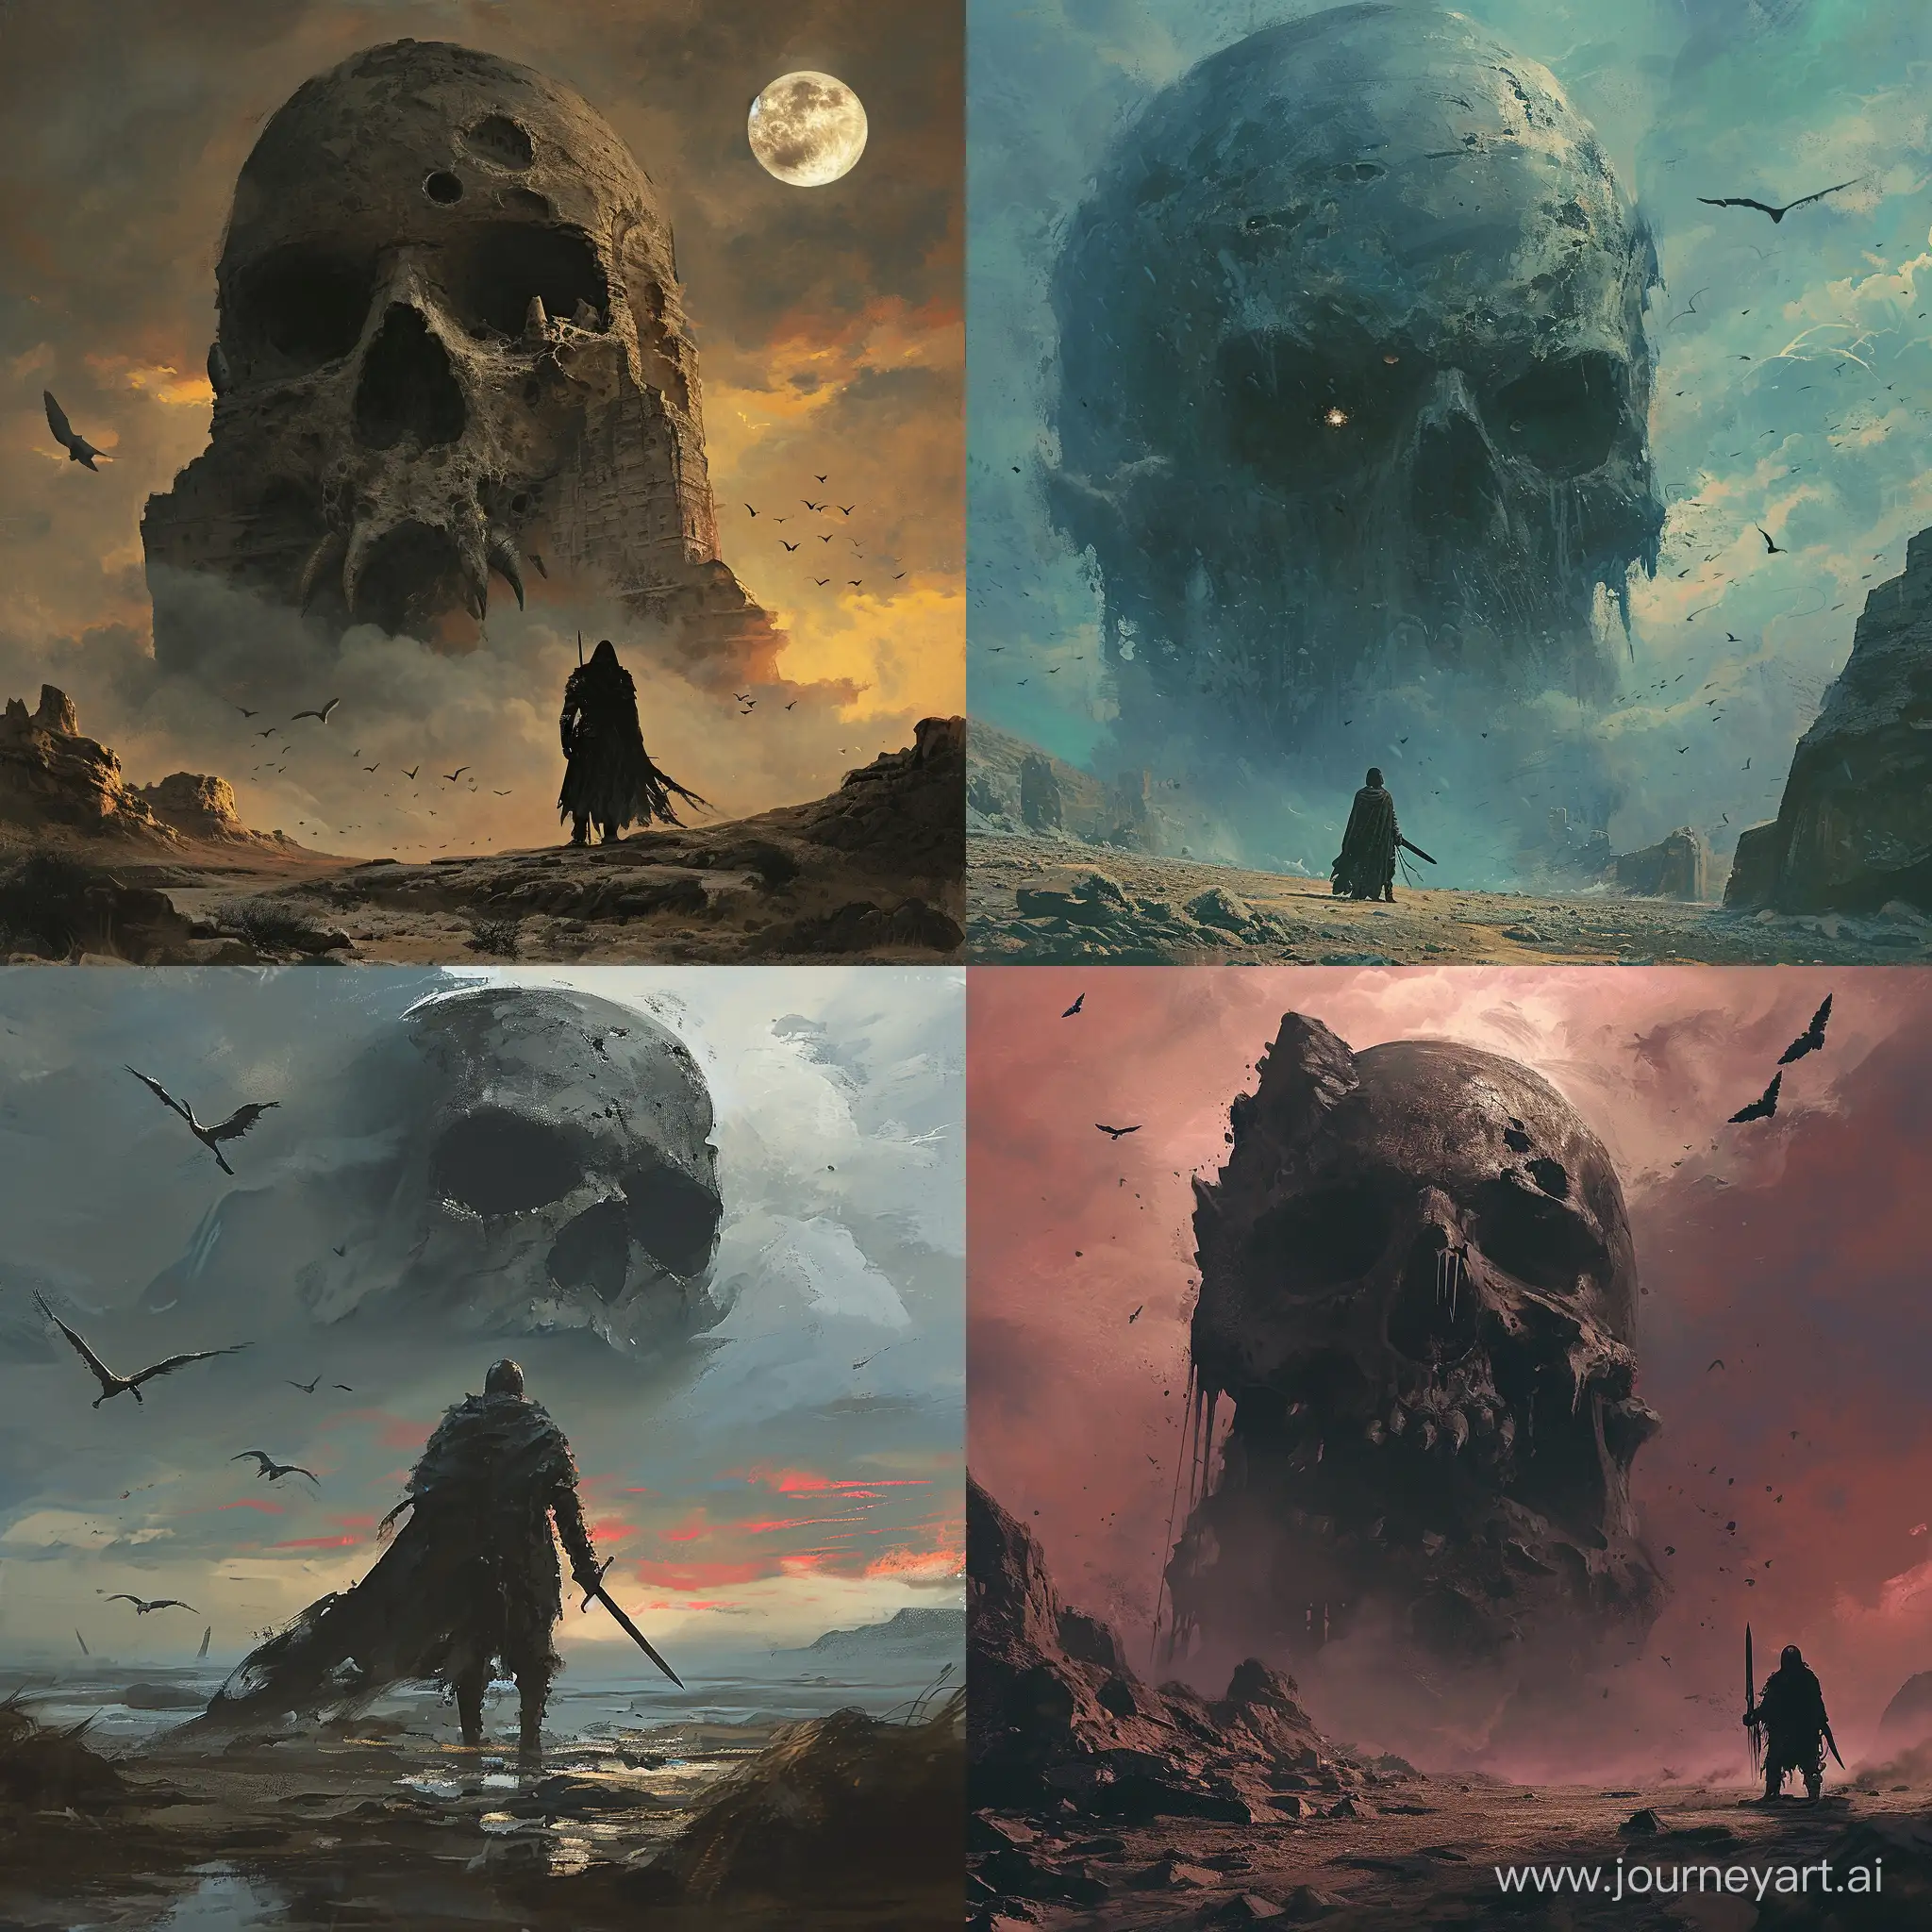 Lone-Warrior-Confronting-Giant-Skull-in-Desolate-Dusk-Landscape